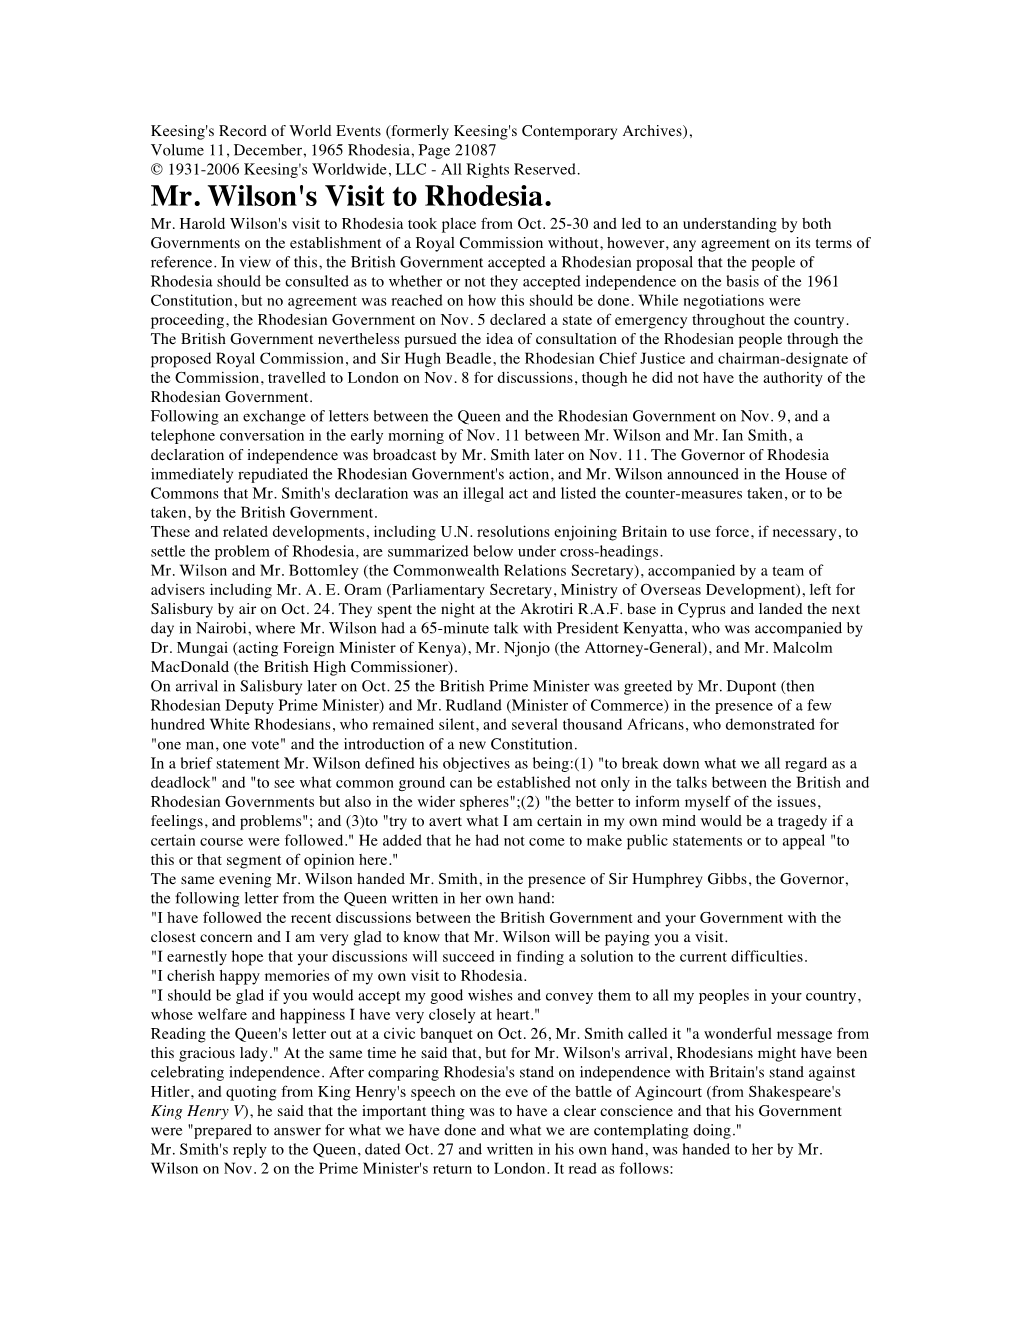 Mr. Wilson's Visit to Rhodesia. Mr